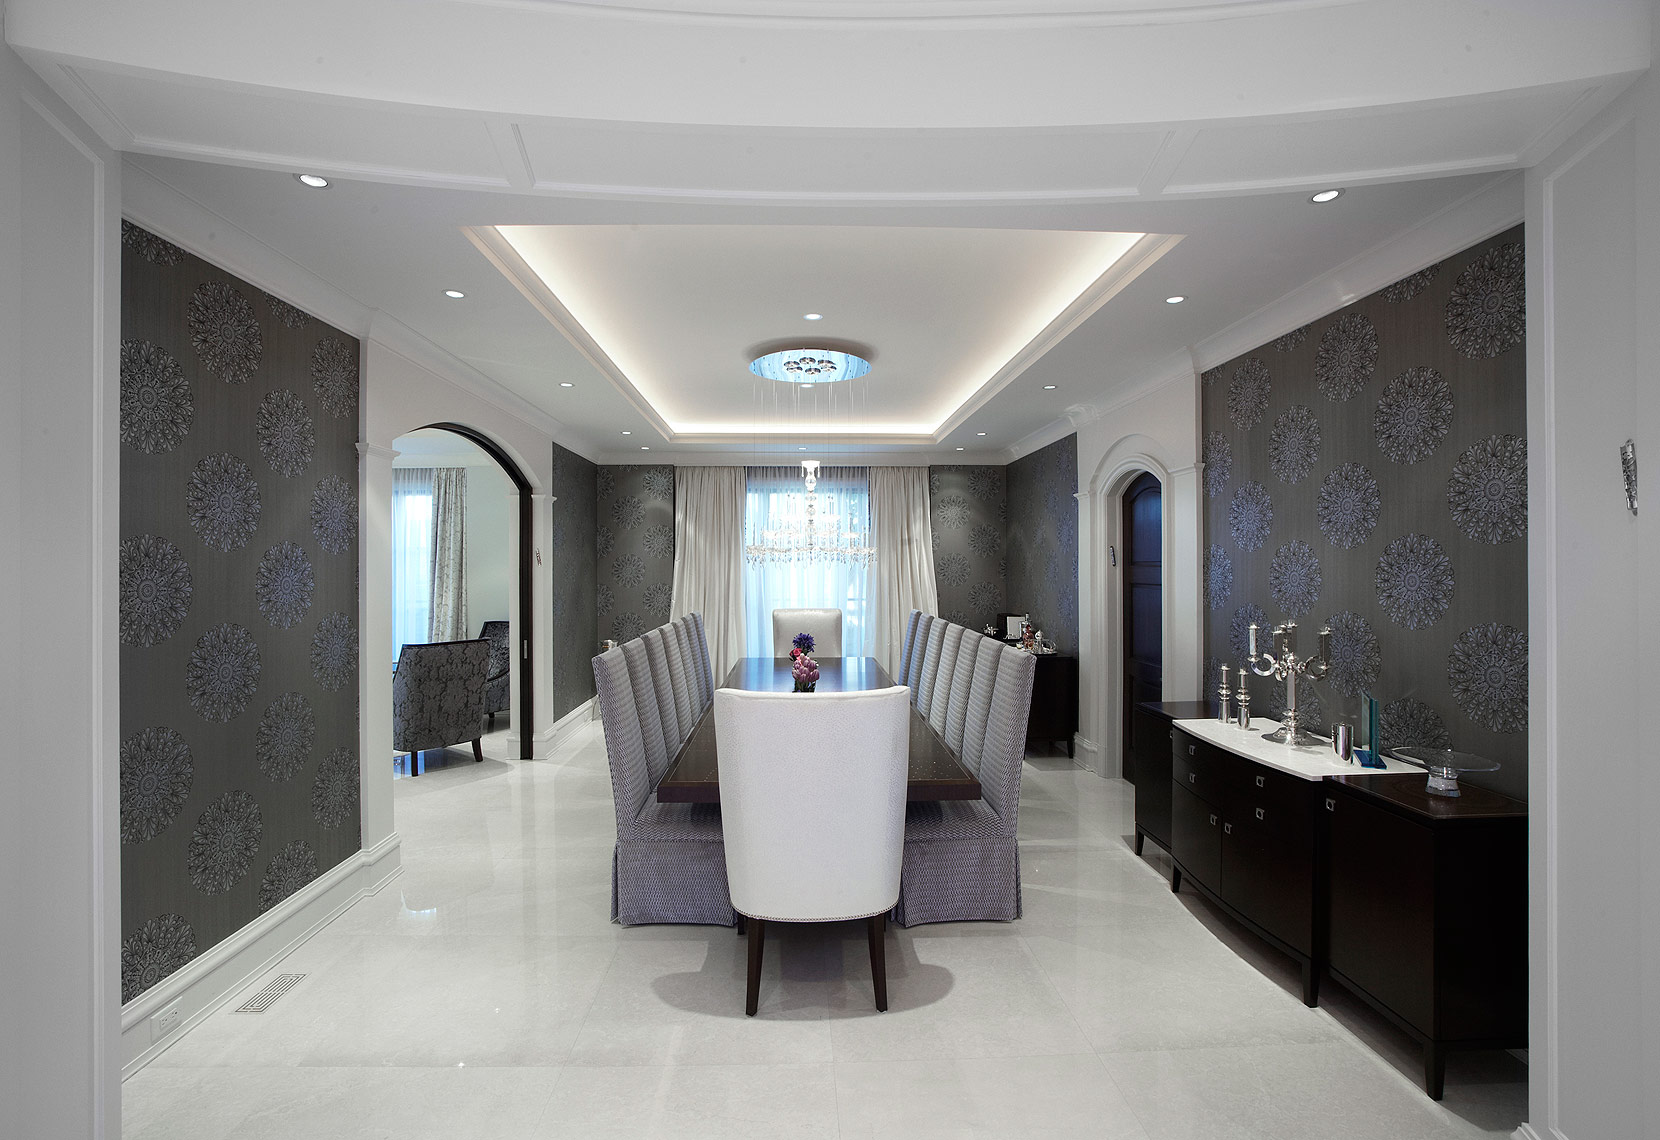 30-interiordesign-transtitional-MakowArchitects-010-diningroom2